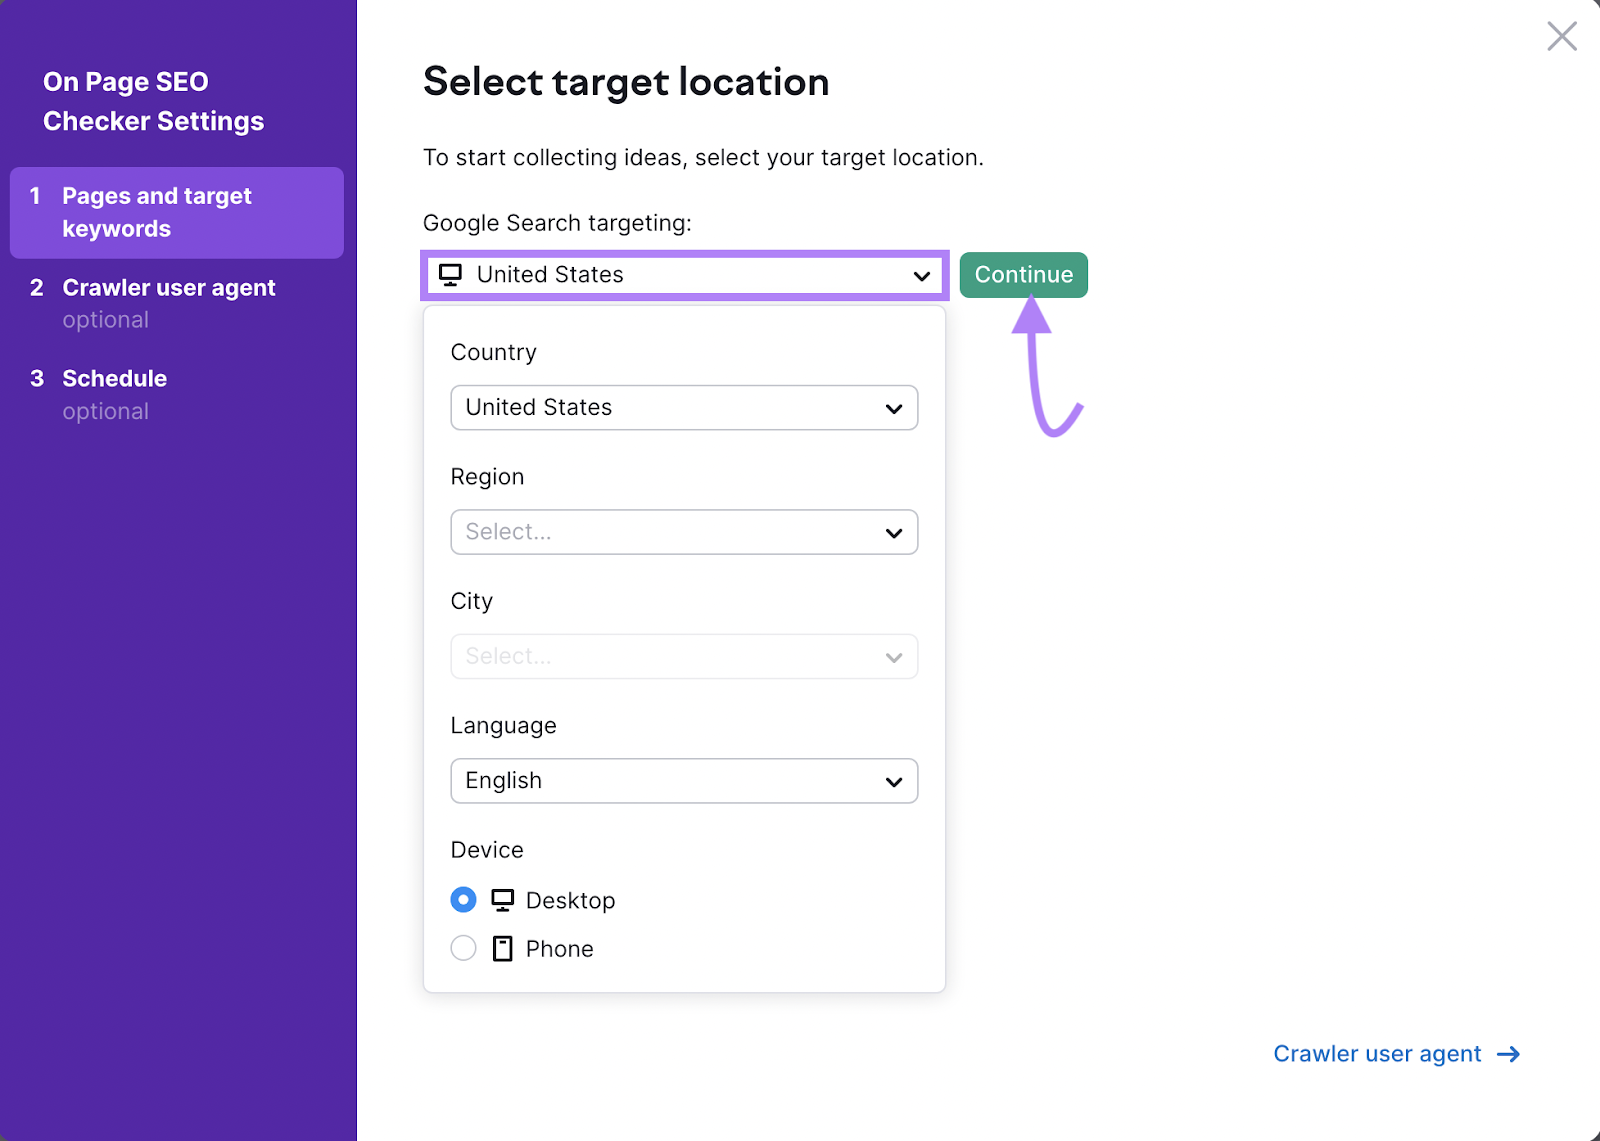 “Select target location” dialog box